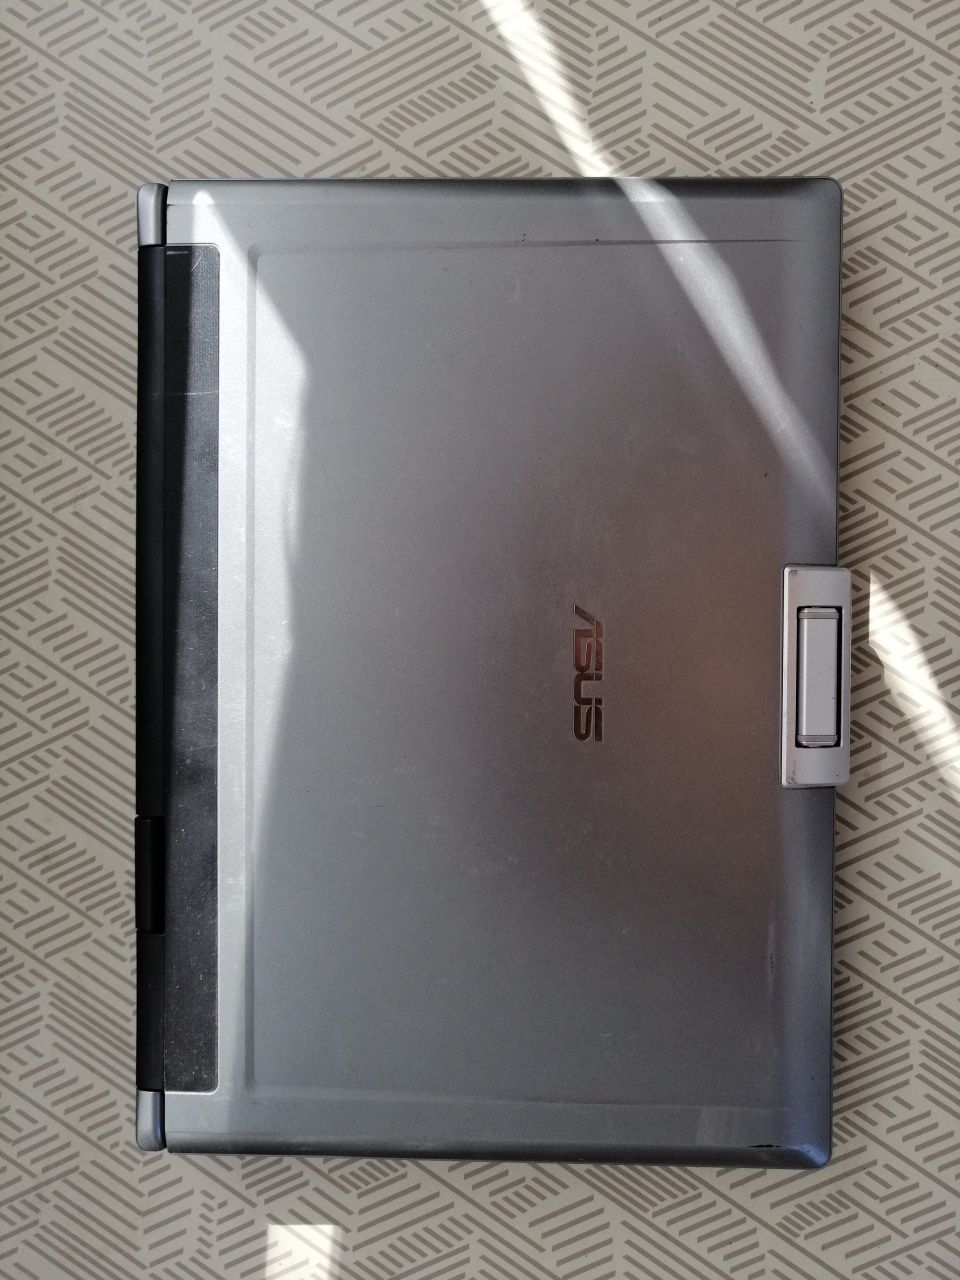 Laptop ASUS F5 Entertainment System